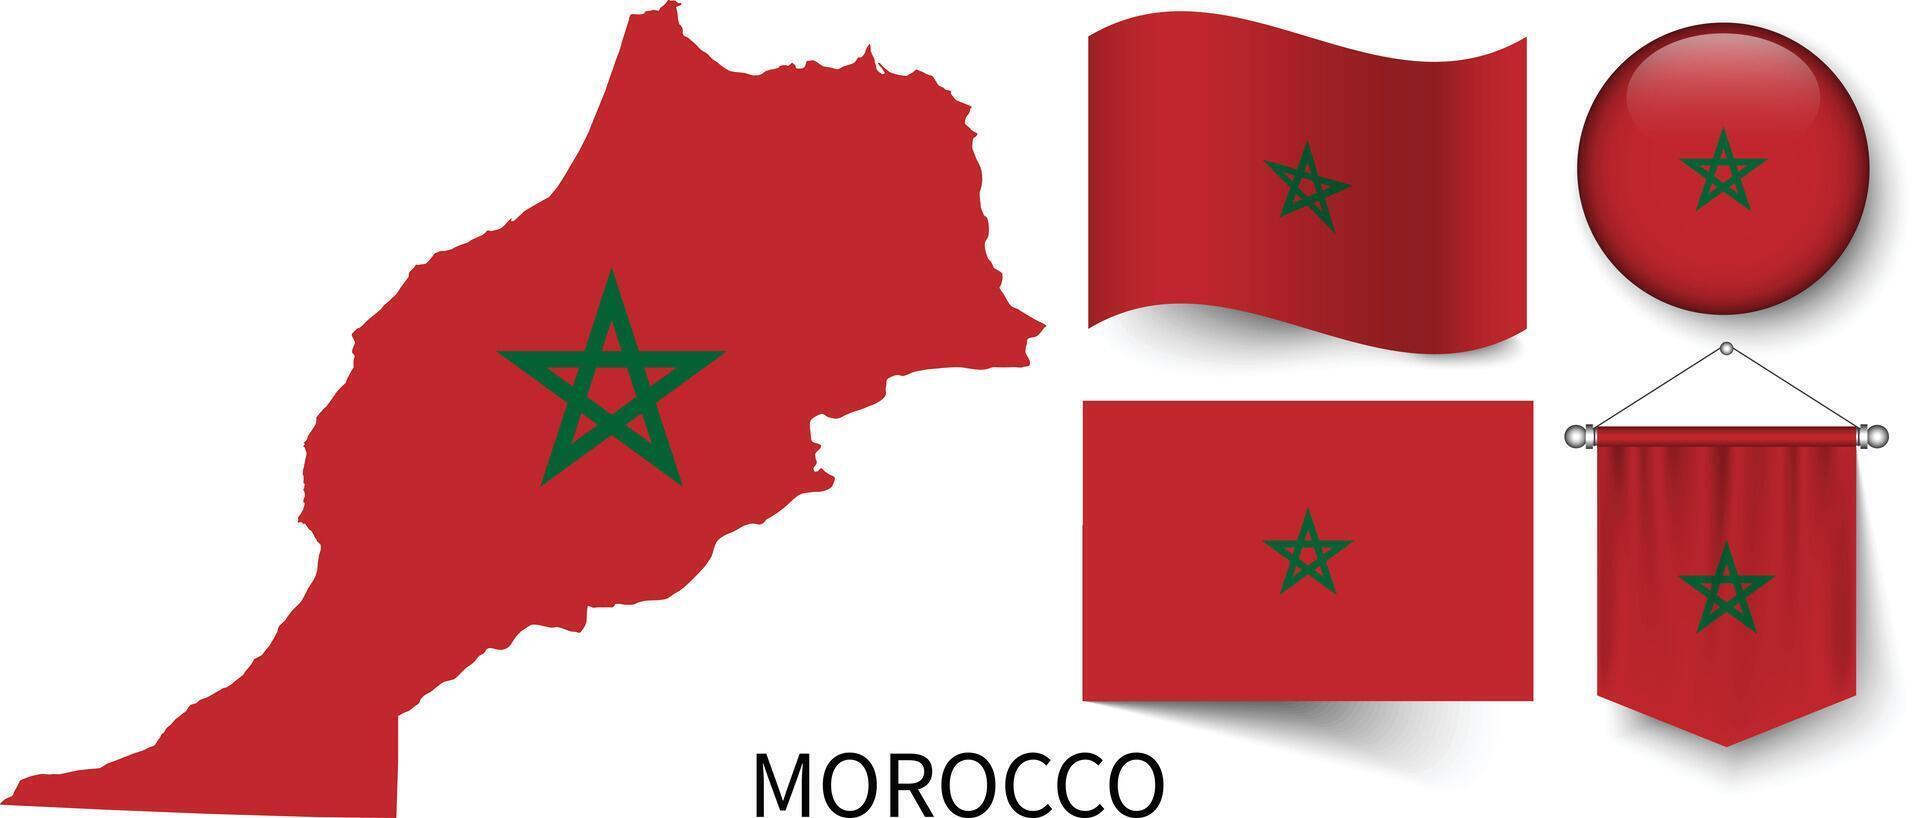 a vários padrões do a Marrocos nacional bandeiras e a mapa do Marrocos fronteiras vetor